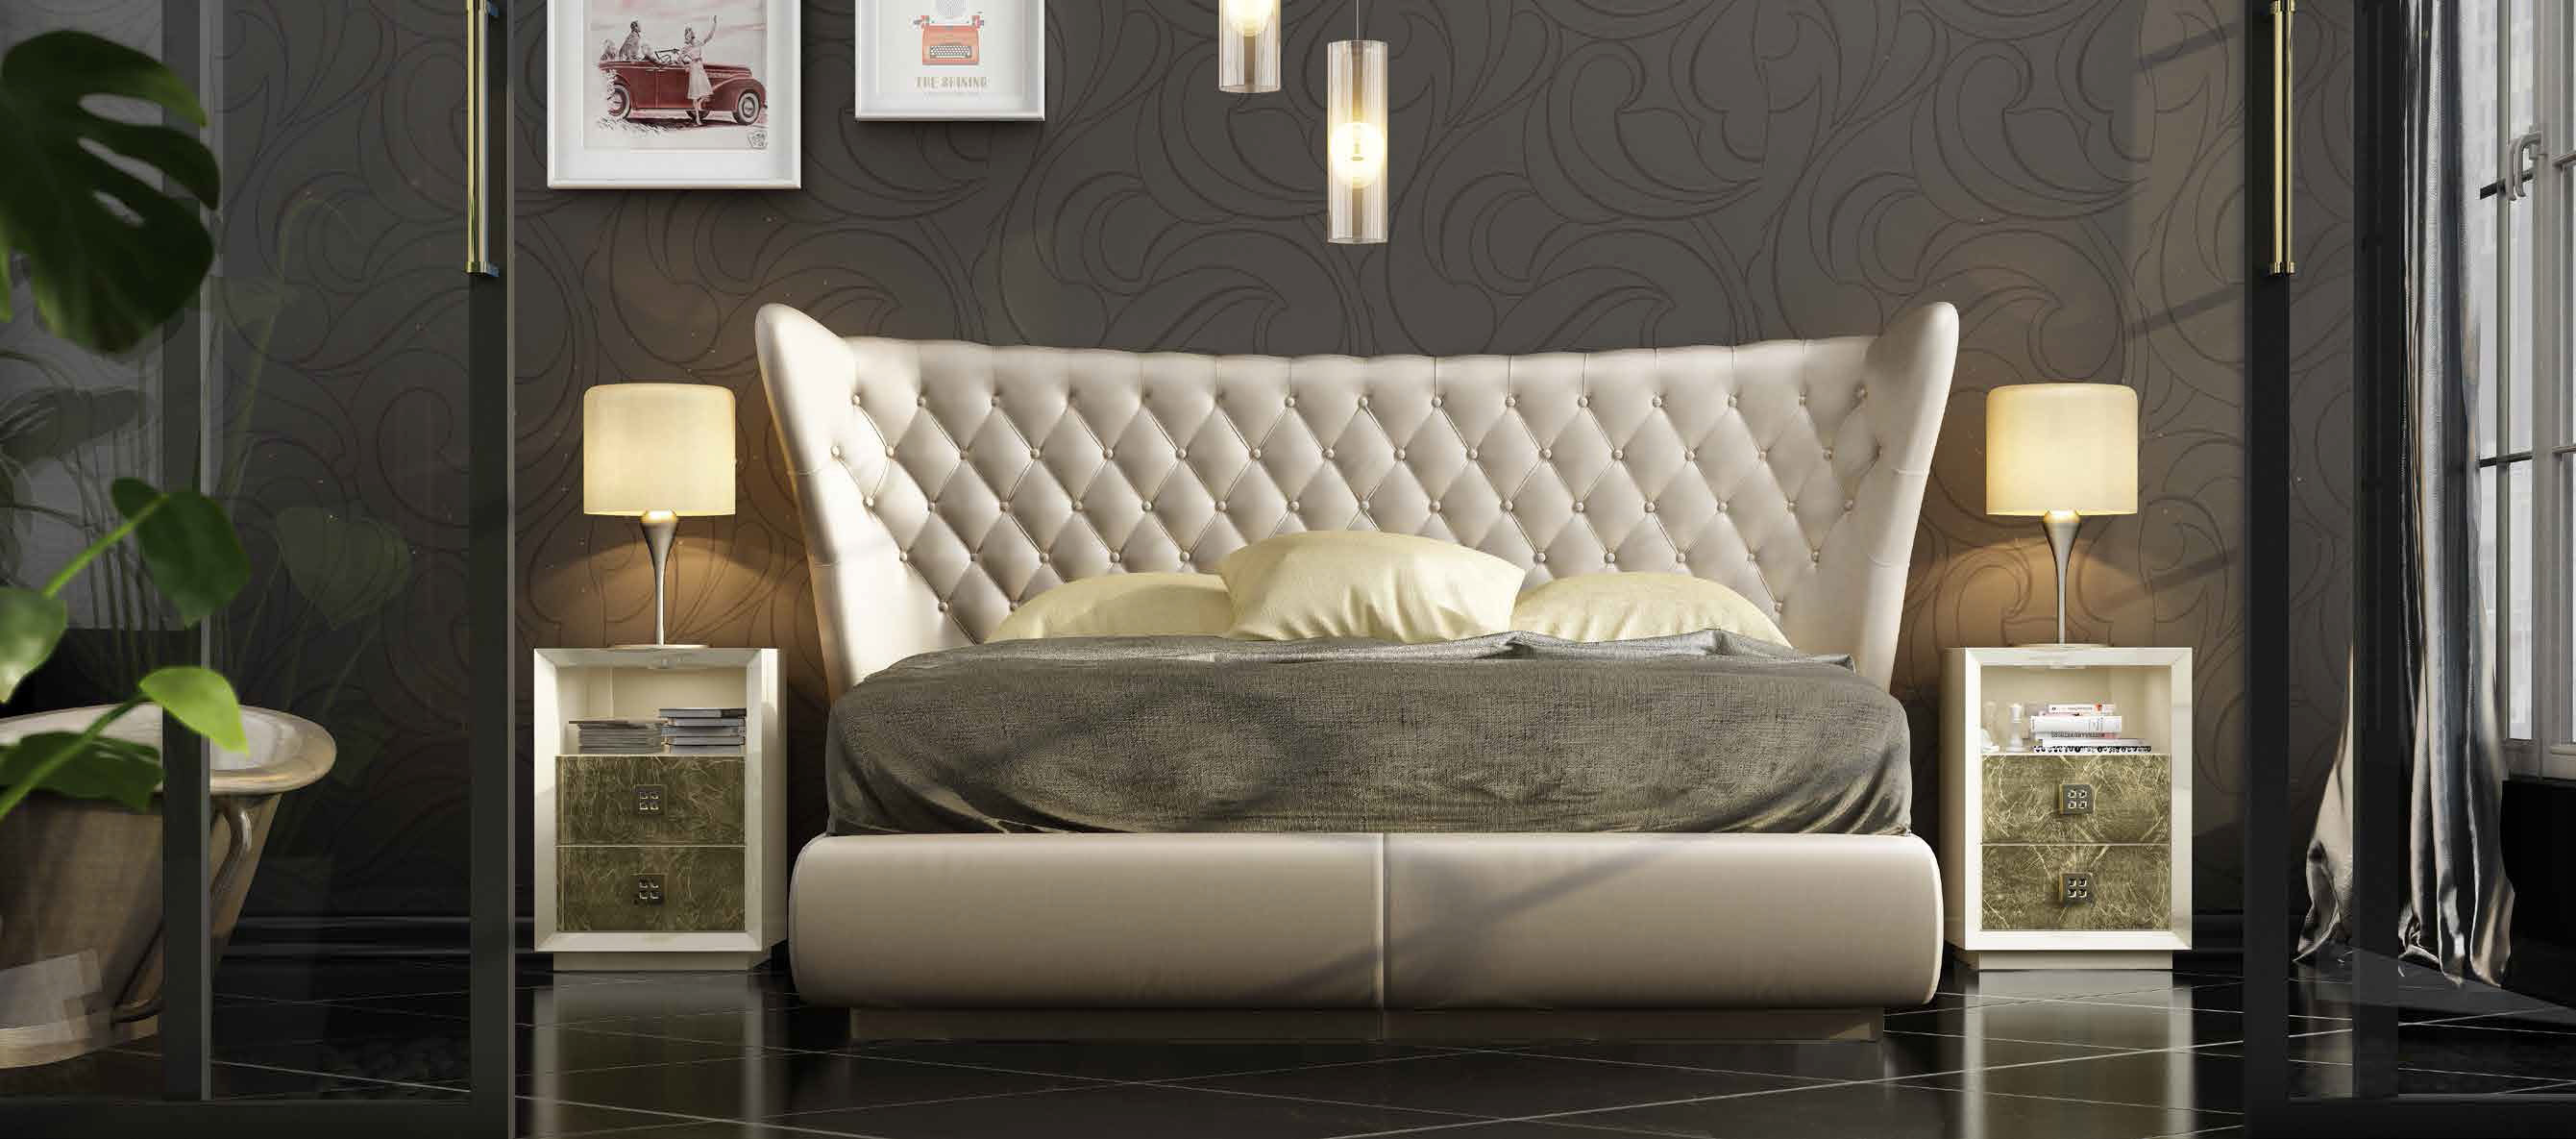 Brands Franco Furniture Bedrooms vol3, Spain DOR 48